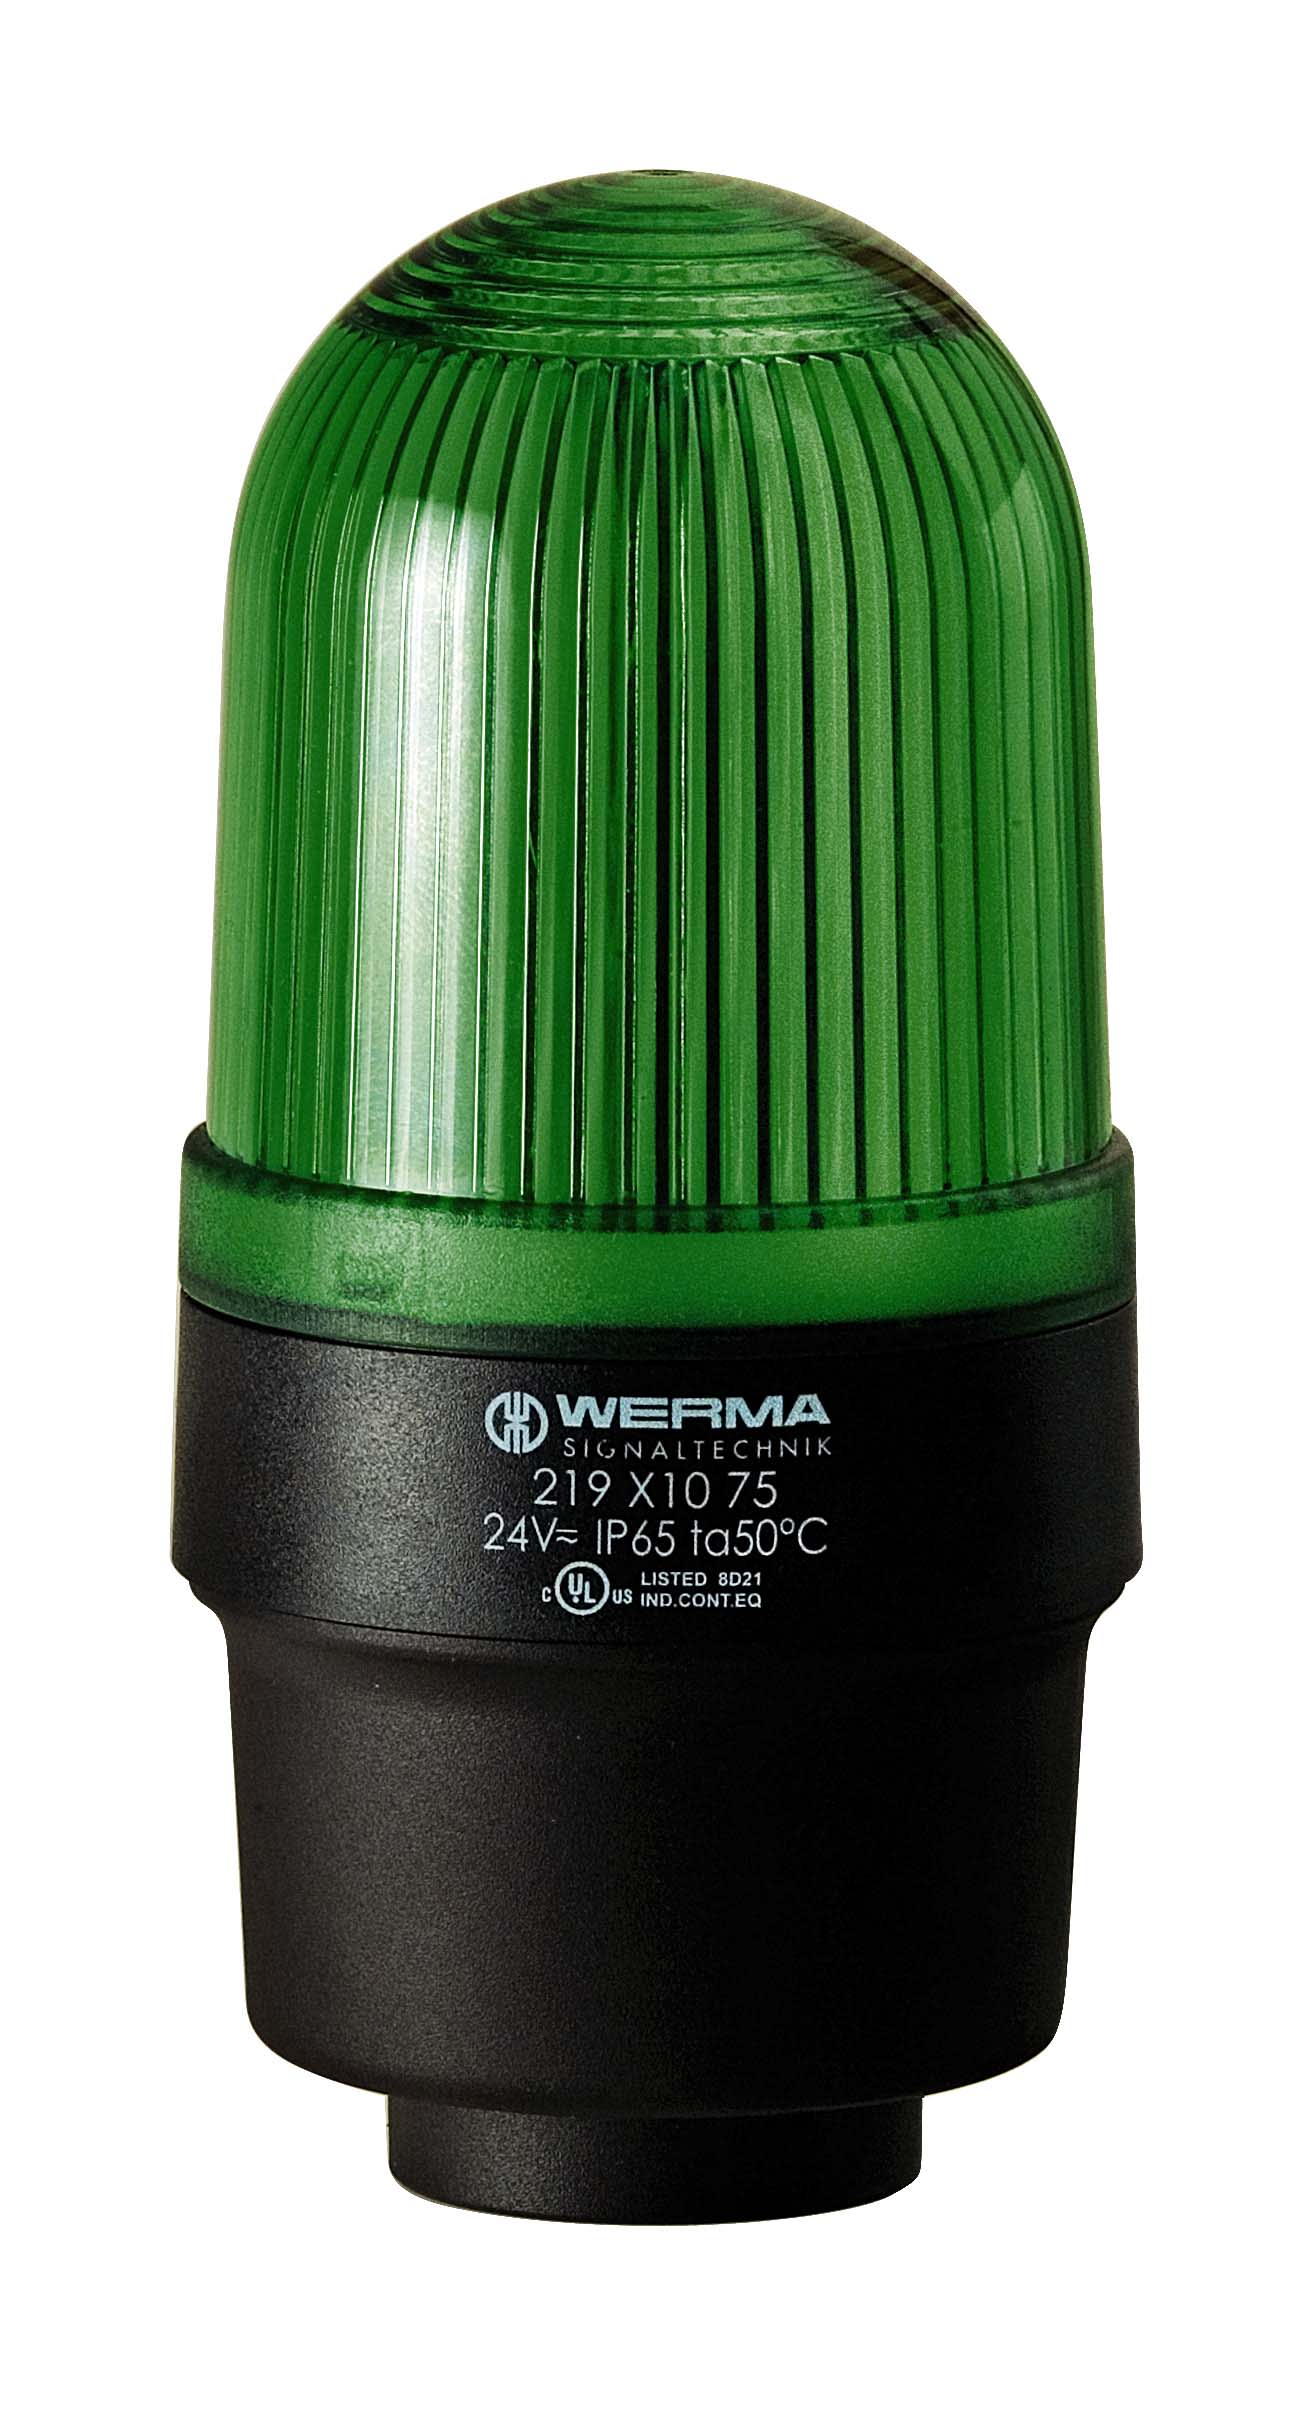 WERMA - Feu fixe - Serie 219 - 115VAC - Vert - Montage sur tube